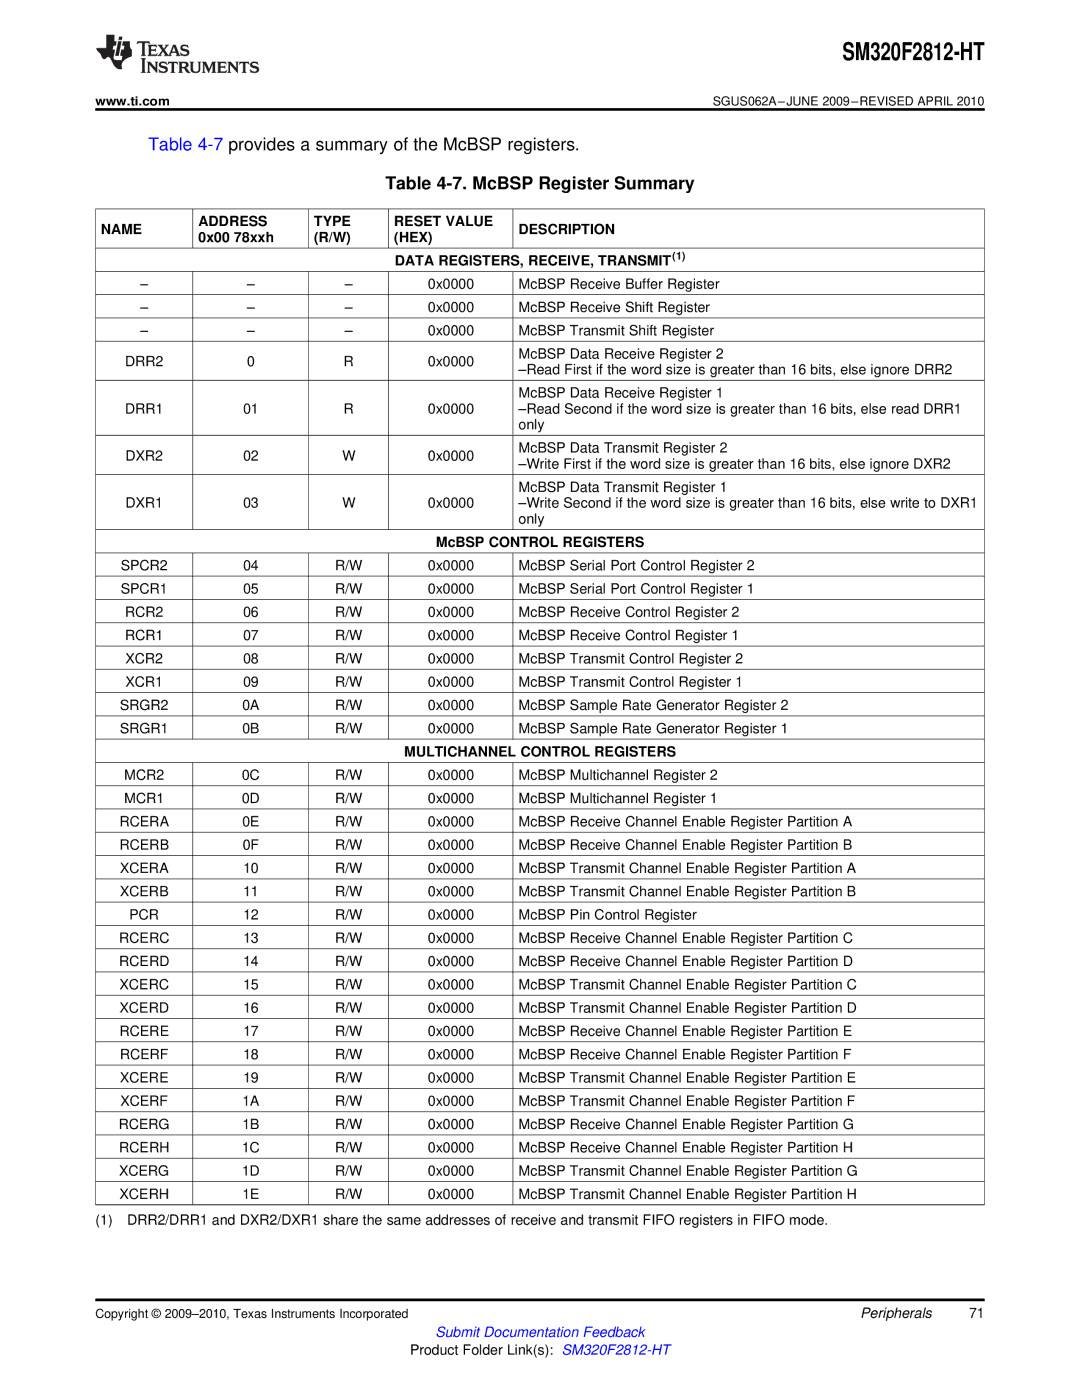 Texas Instruments SM320F2812-HT specifications McBSP Register Summary, Name Address Type Reset Value Description, Hex 